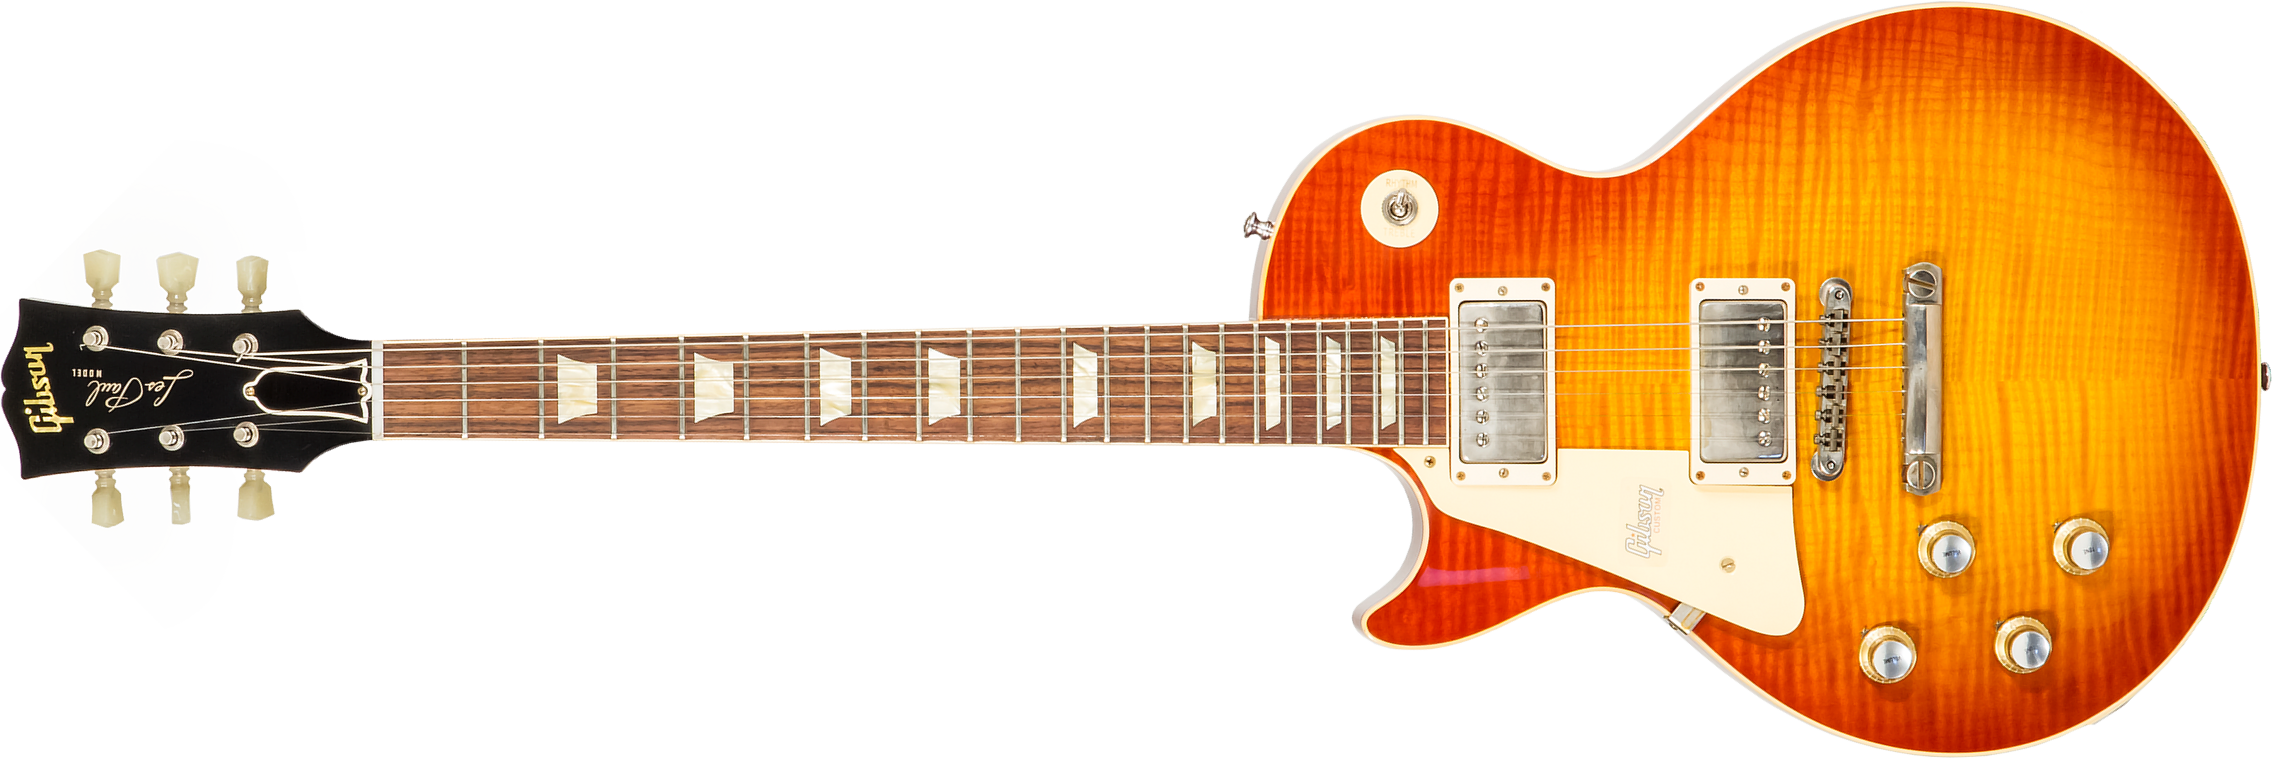 Gibson Custom Shop Les Paul Standard 1960 Reissue Lh Gaucher 2h Ht Rw #09122 - Vos Tangerine Burst - Left-handed electric guitar - Main picture